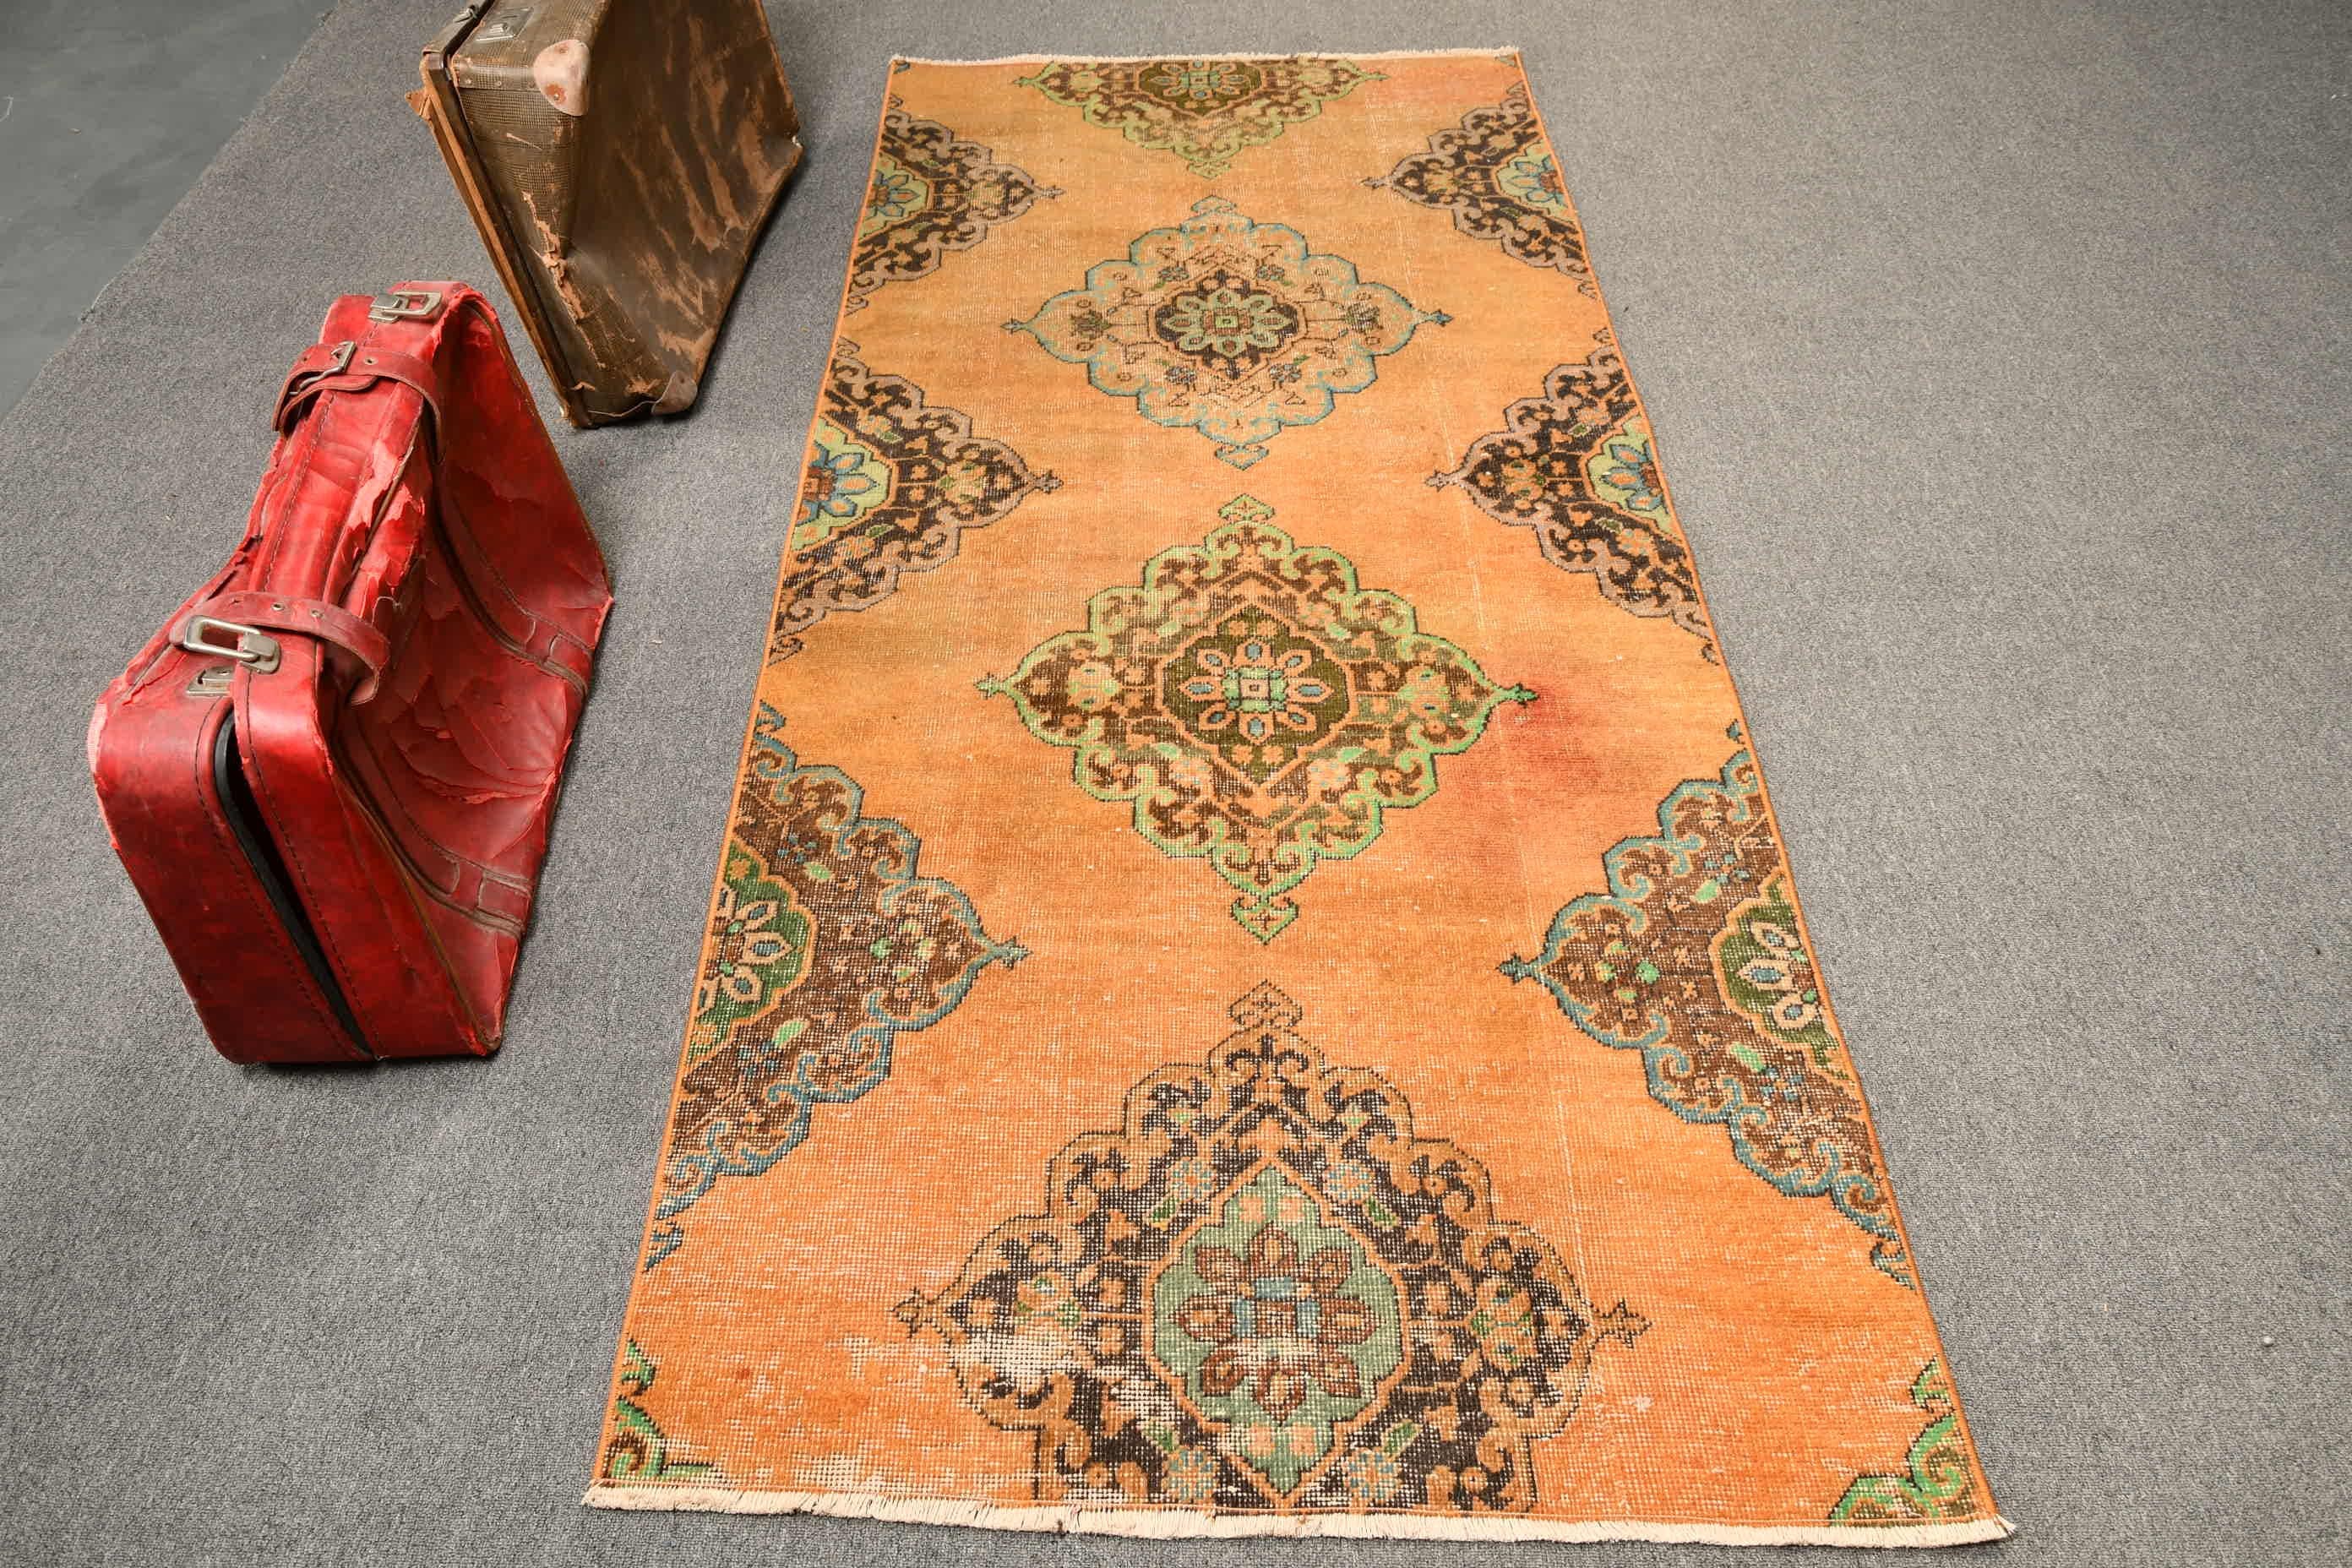 Anatolian Rugs, Rugs for Floor, Bedroom Rugs, Kitchen Rug, Turkish Rug, Floor Rug, Vintage Rug, Orange  3.3x7.6 ft Area Rugs